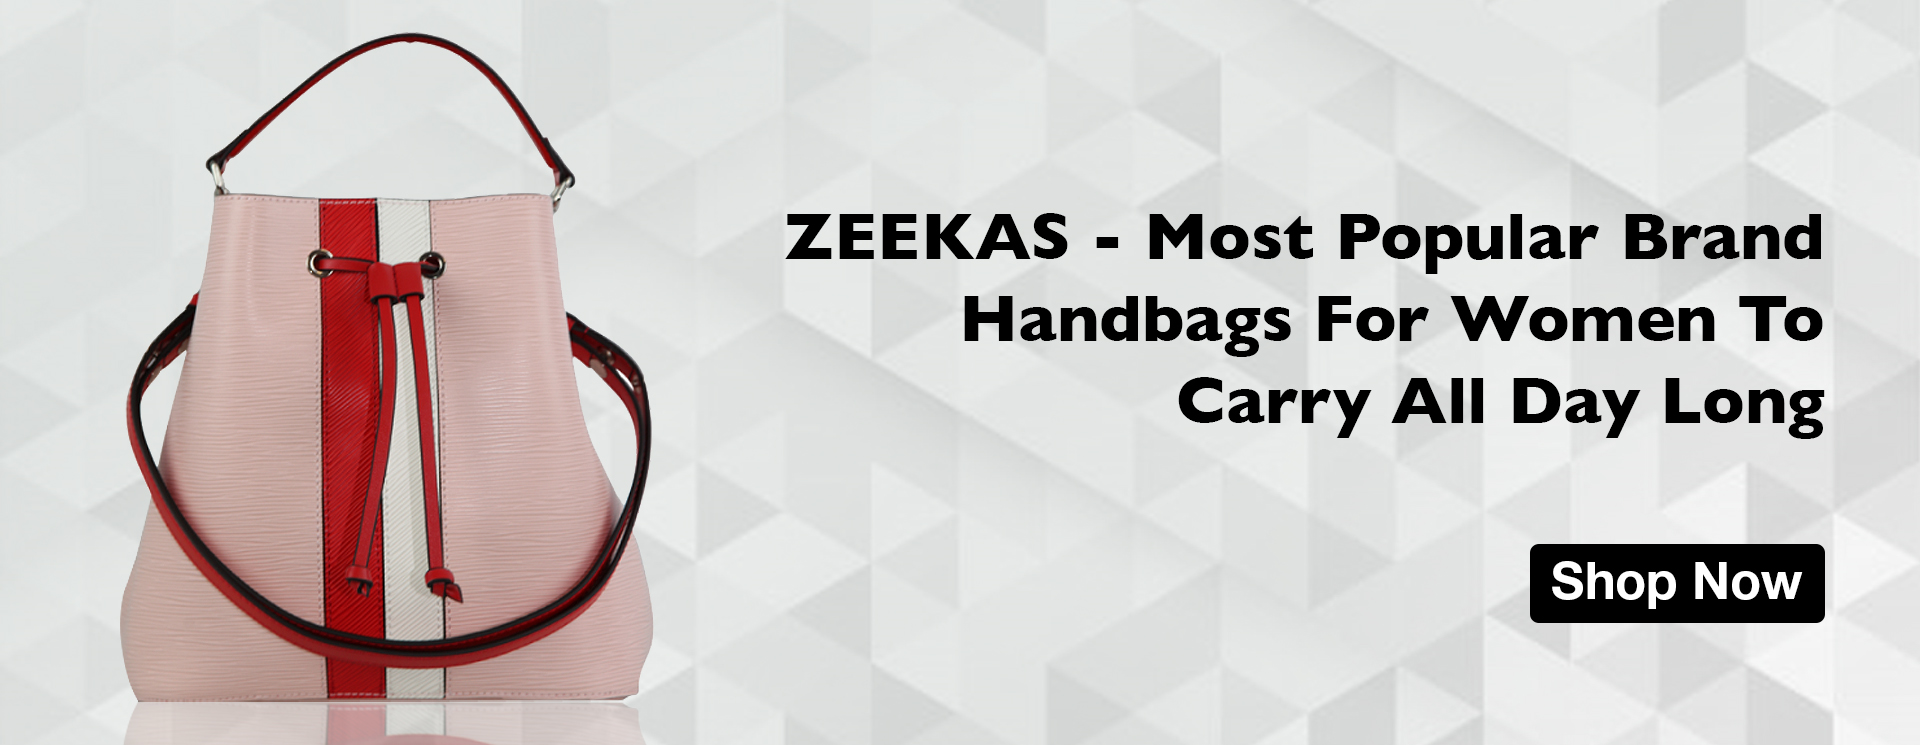 ZEEKAS - Most Popular Brand Handbags For Women To Carry All Day Long